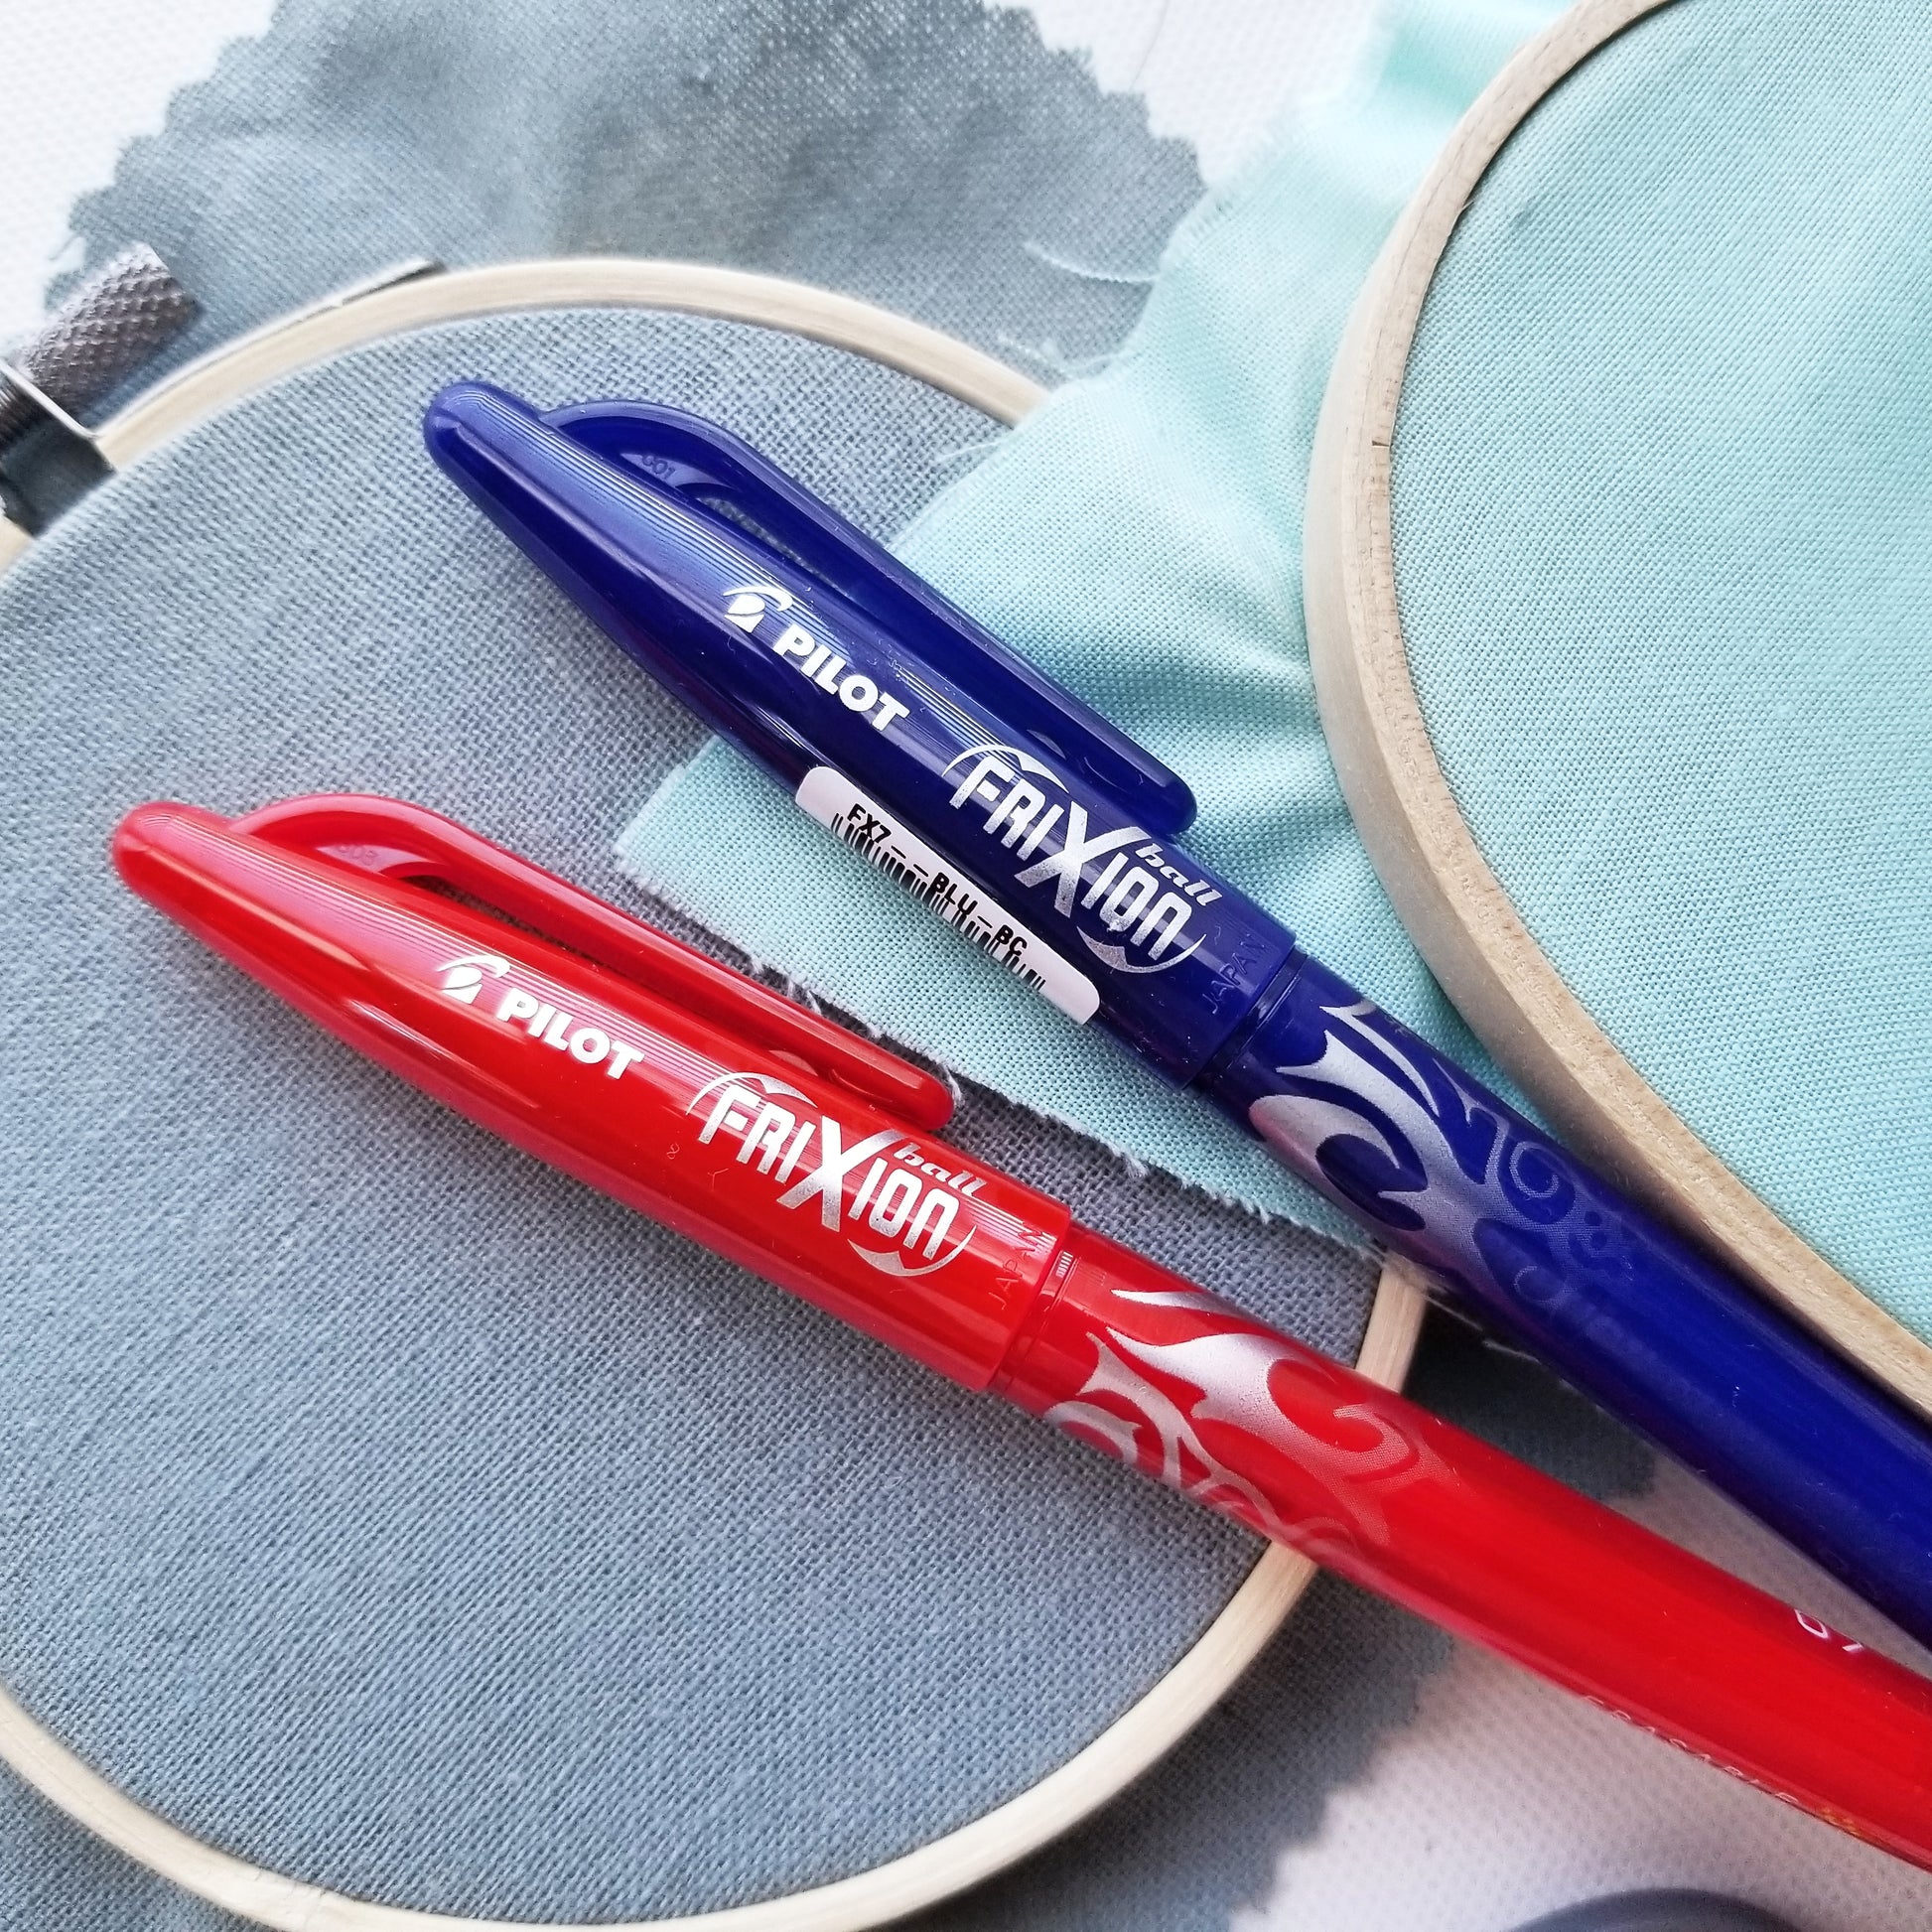 DMC Embroidery Transfer Pen (Blue)